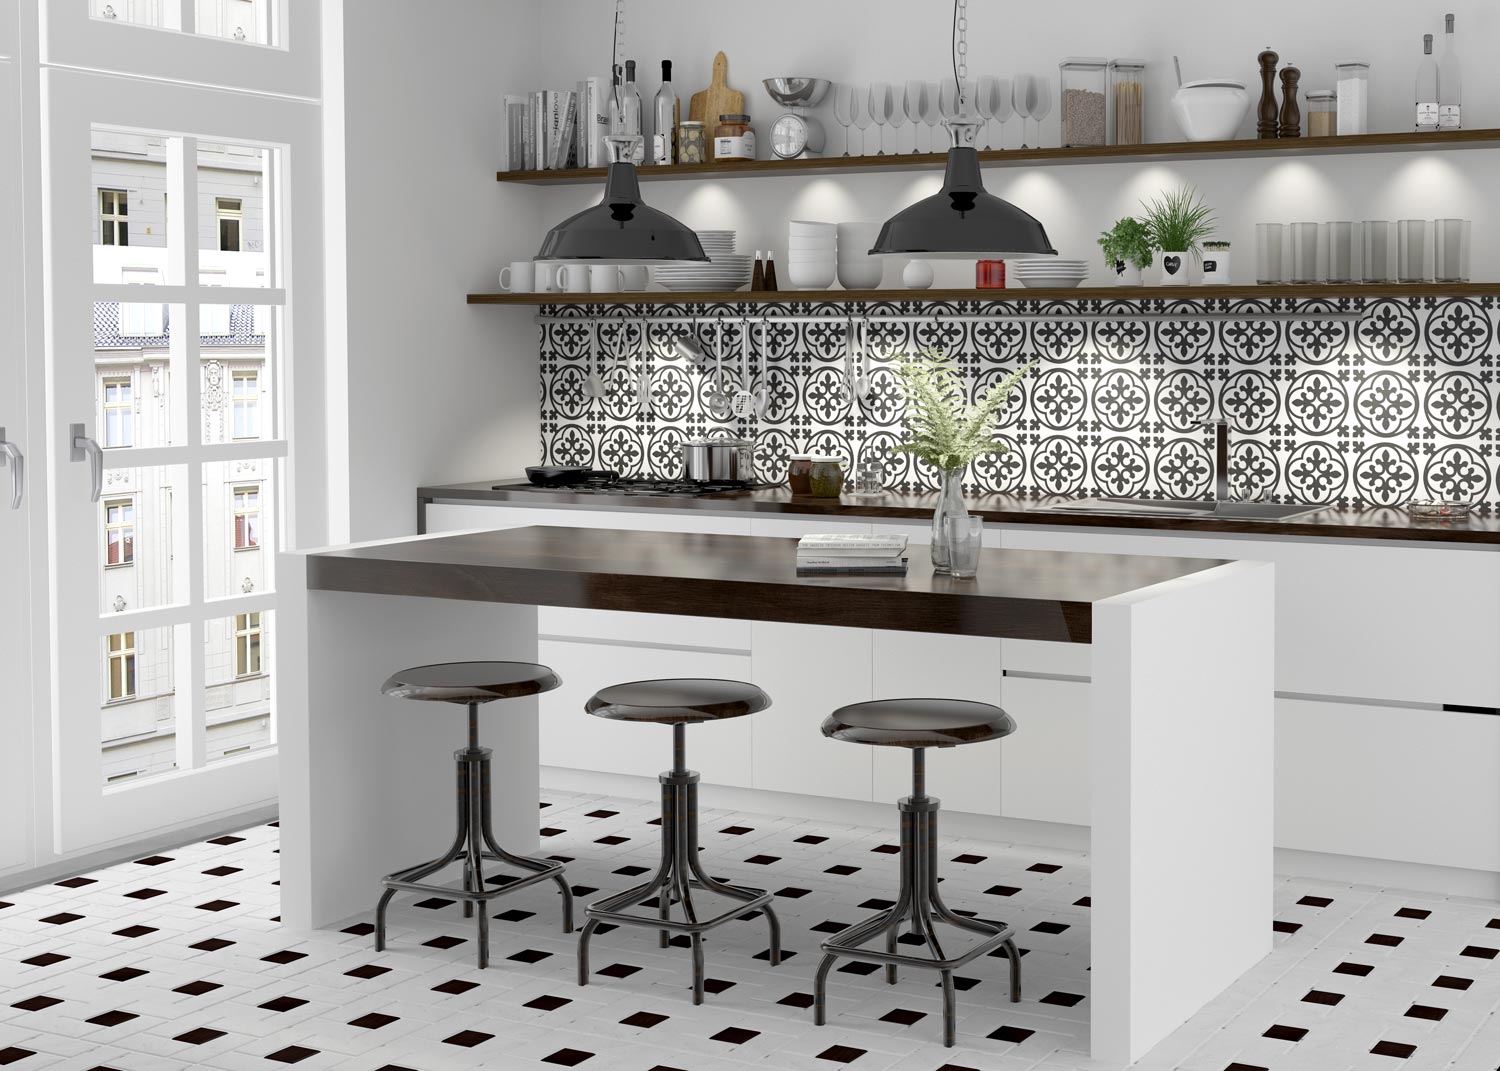 Monochromatic kitchen tile design